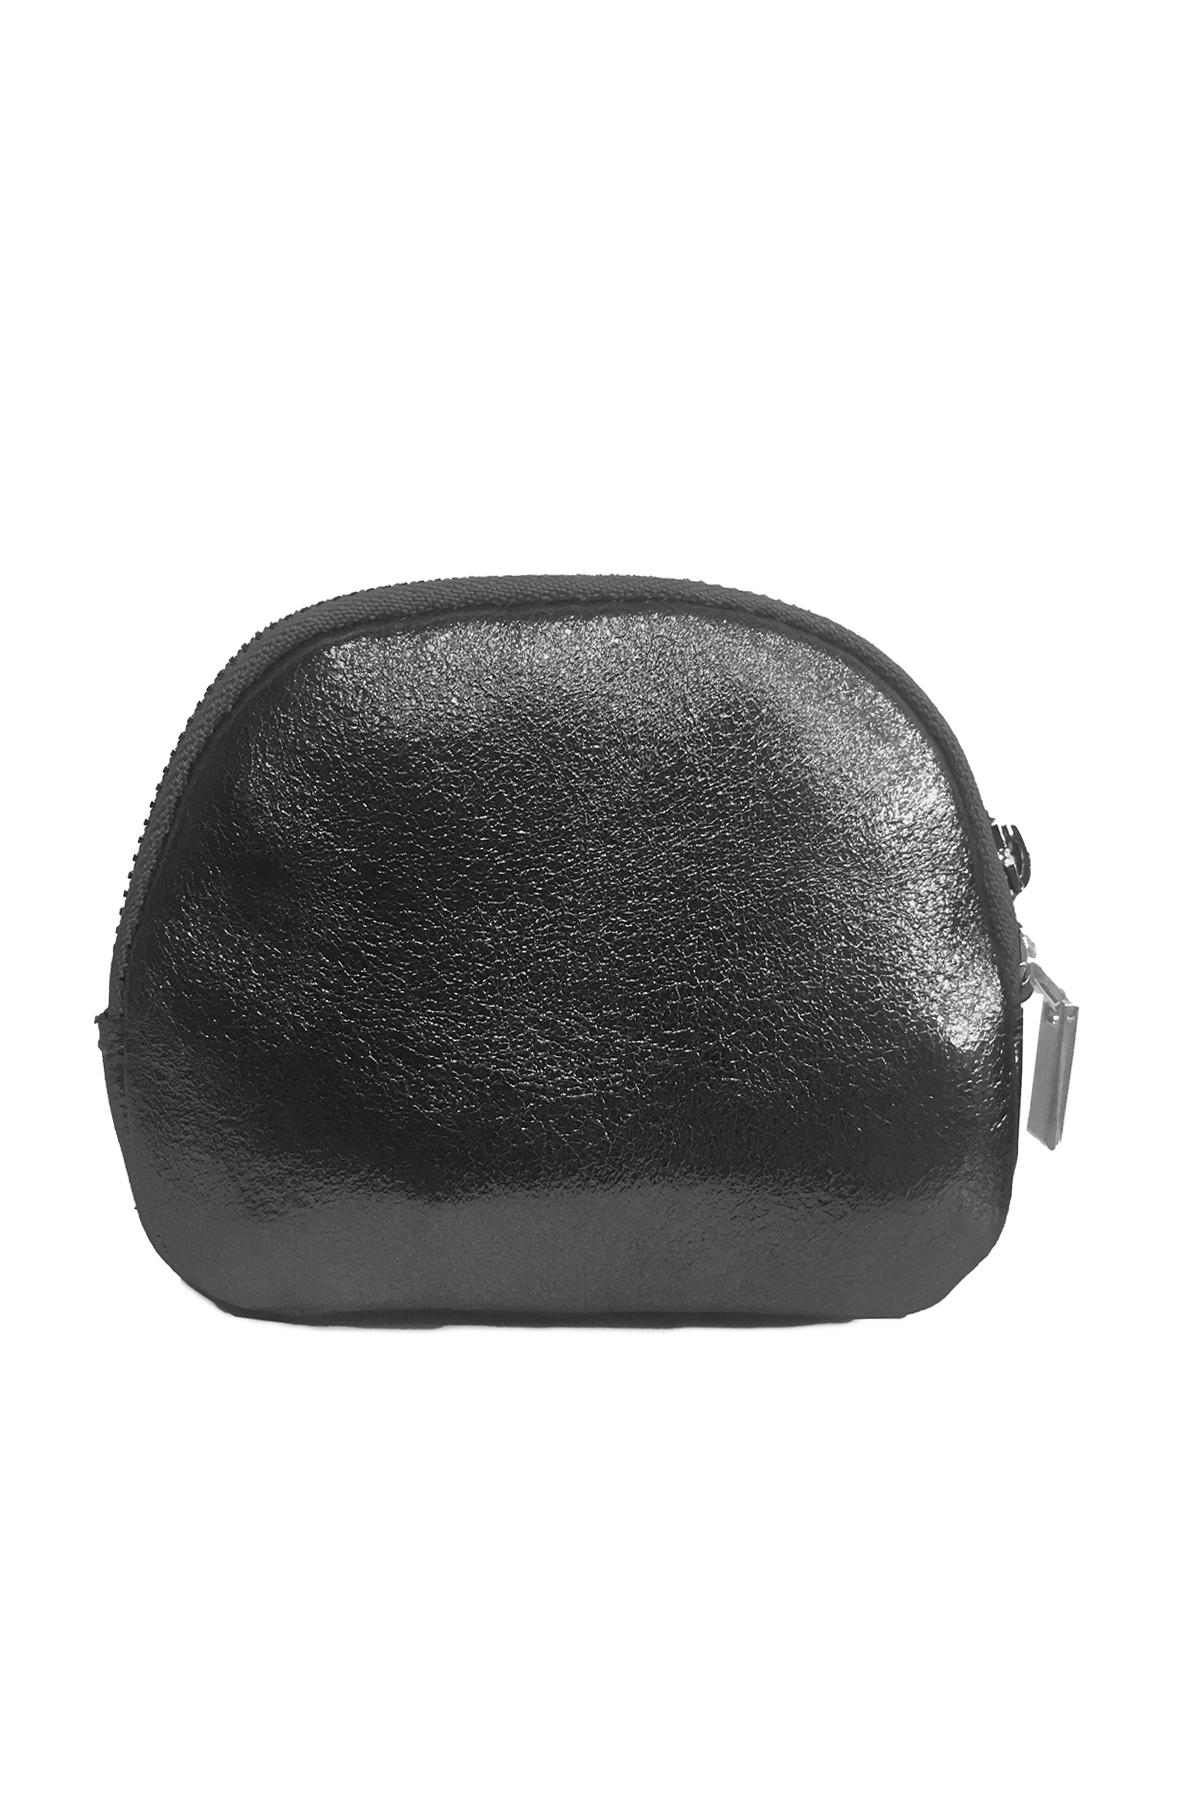 Portafogli Borse Glossy black ITALINA - RITELLE (CHERRY LEATHER) 3990C #c Efashion Paris